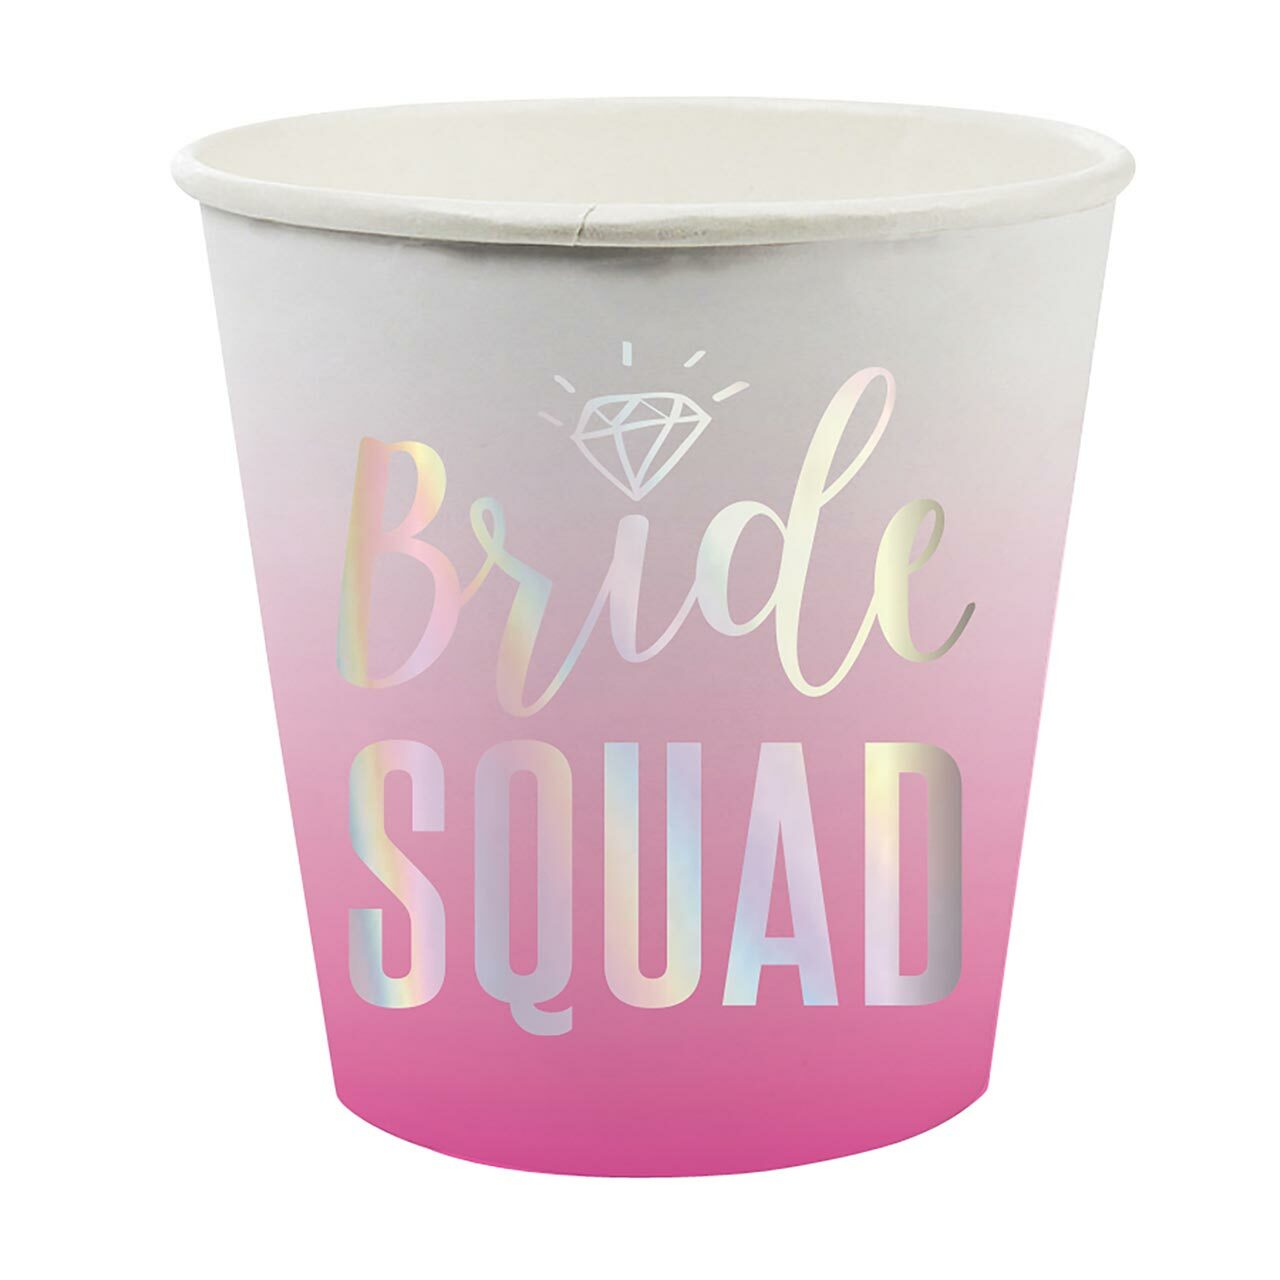 Bride Squad Cup